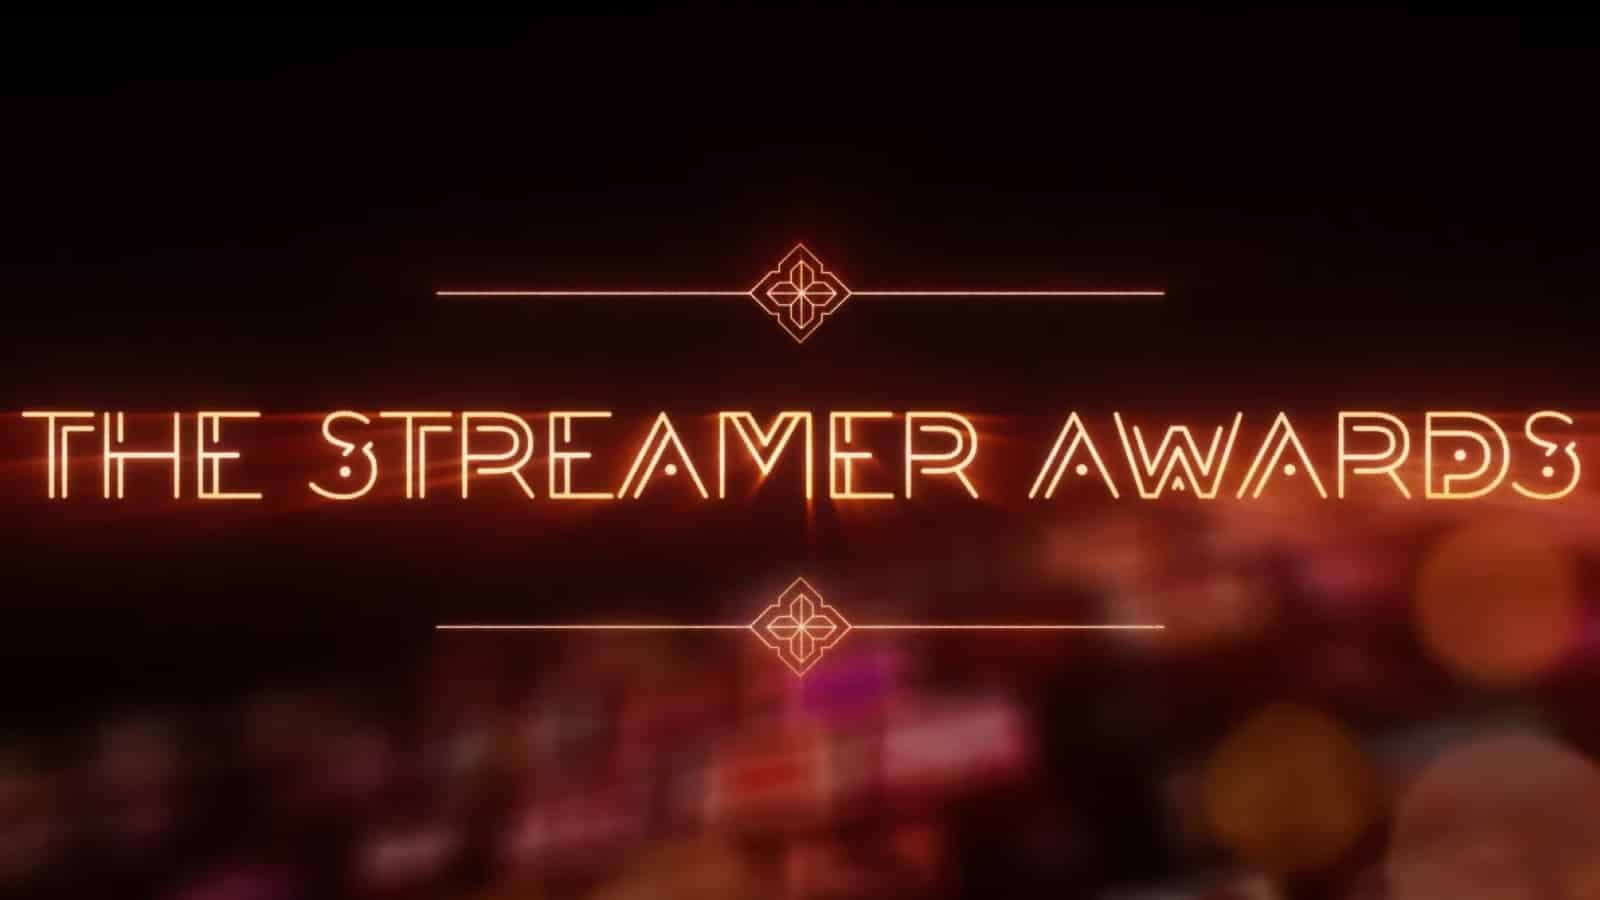 the streamer awards logo